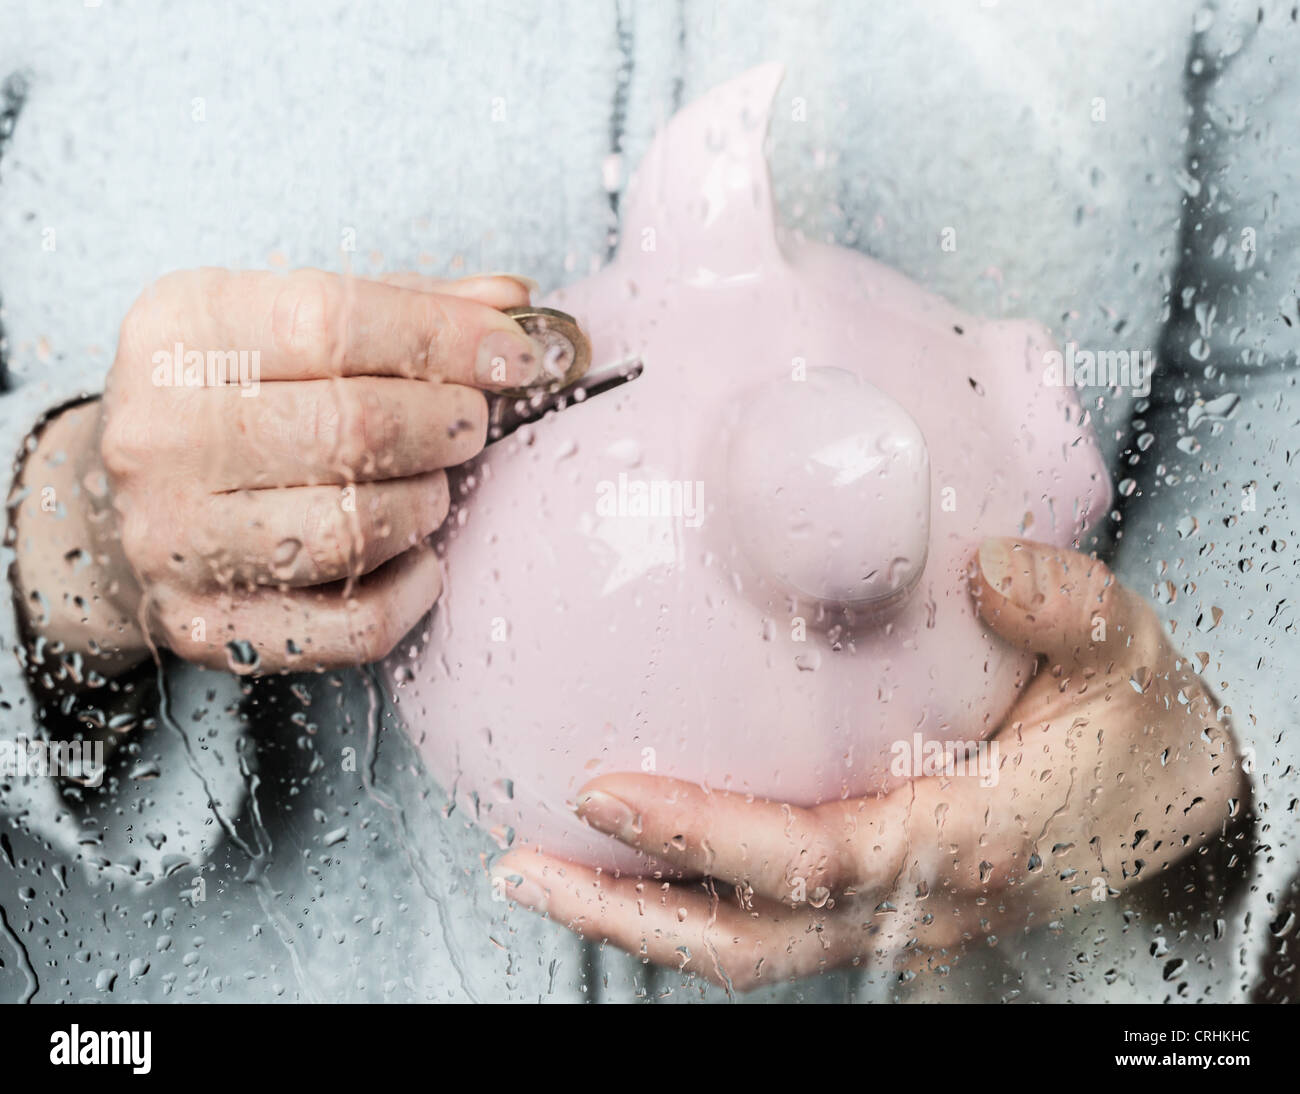 Woman saving money at rainy window Stock Photo